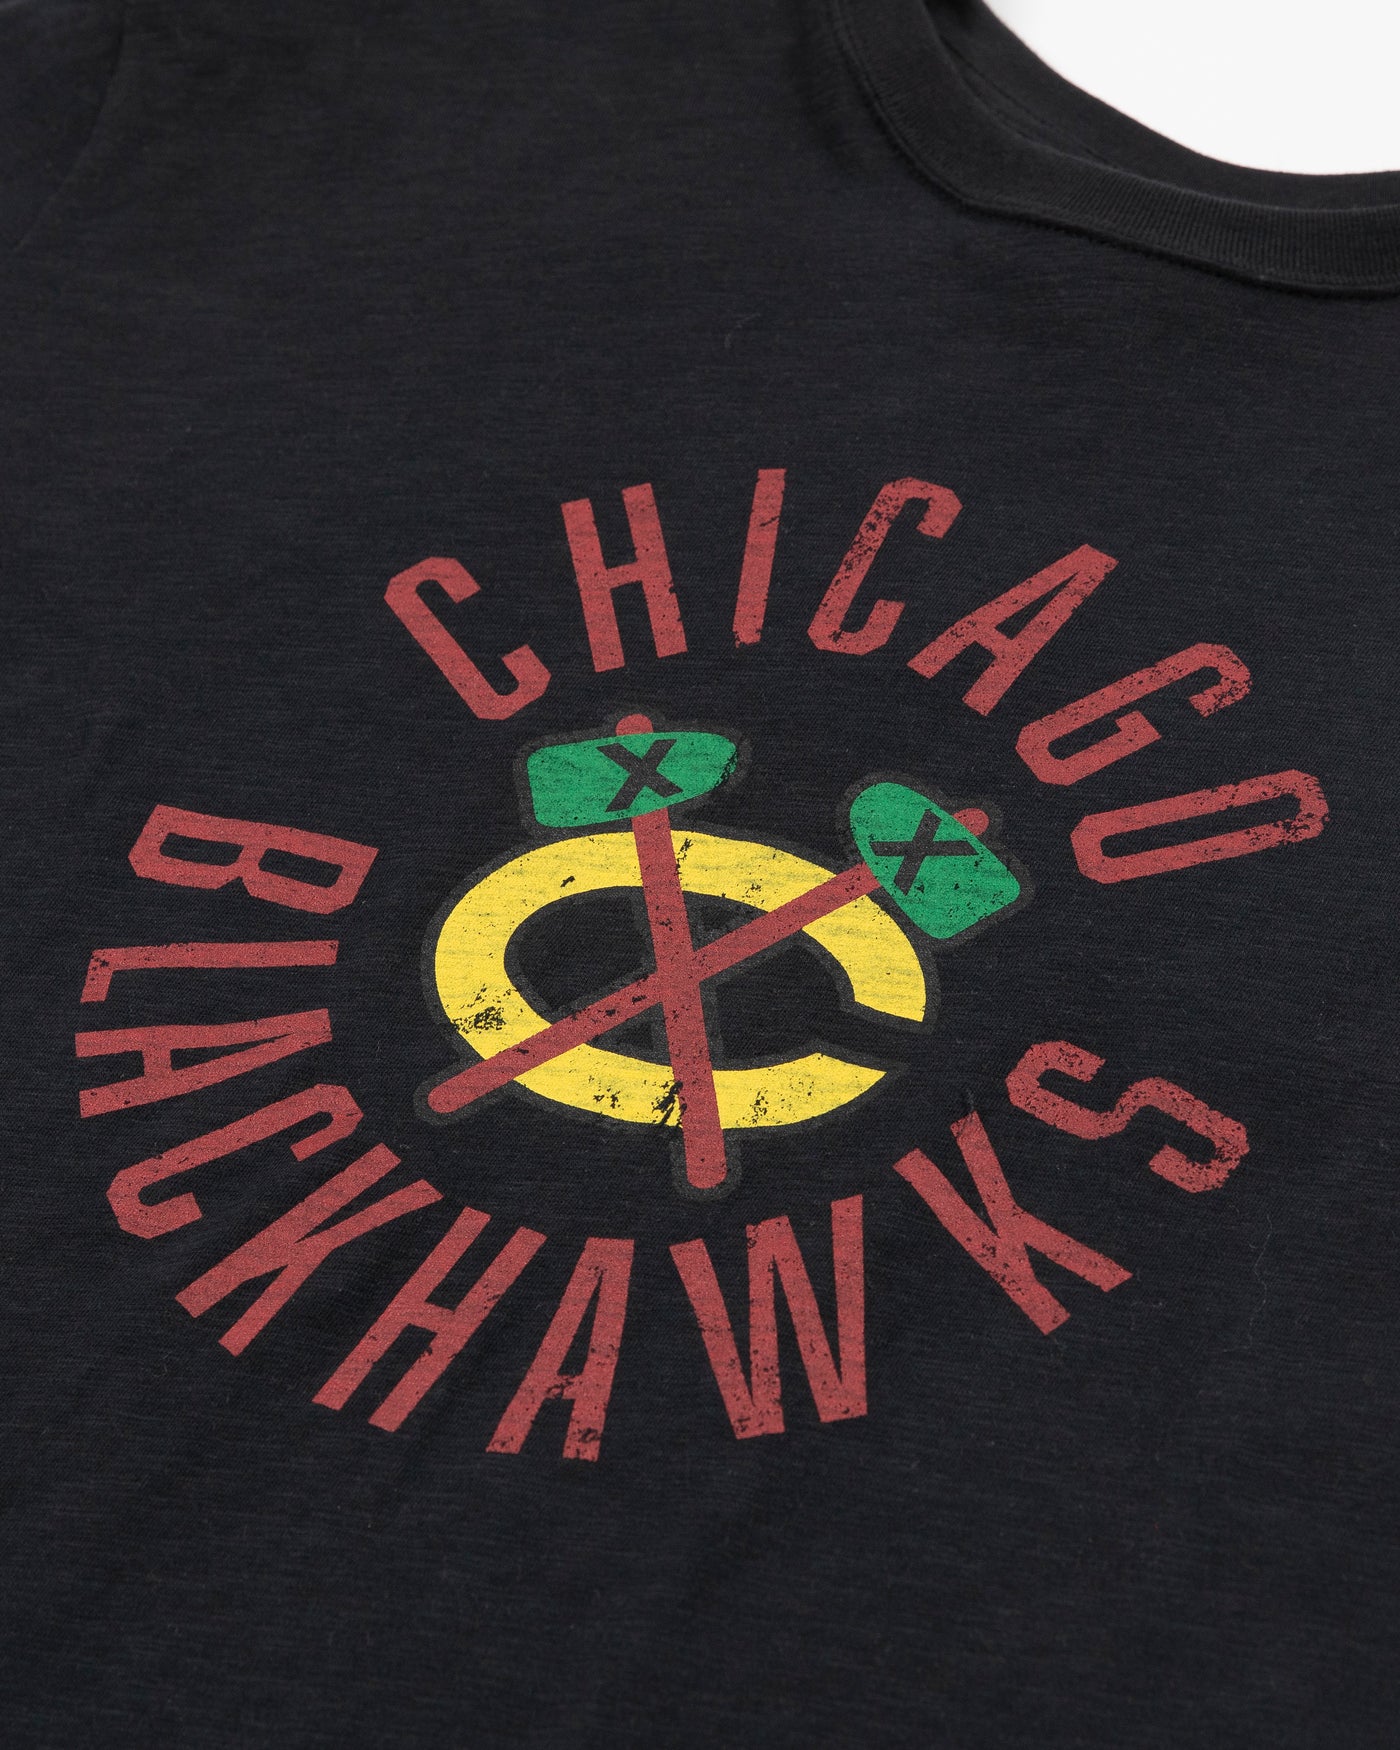 Mitchell & Ness Chicago Blackhawks Legendary Slub Short Sleeve Tee